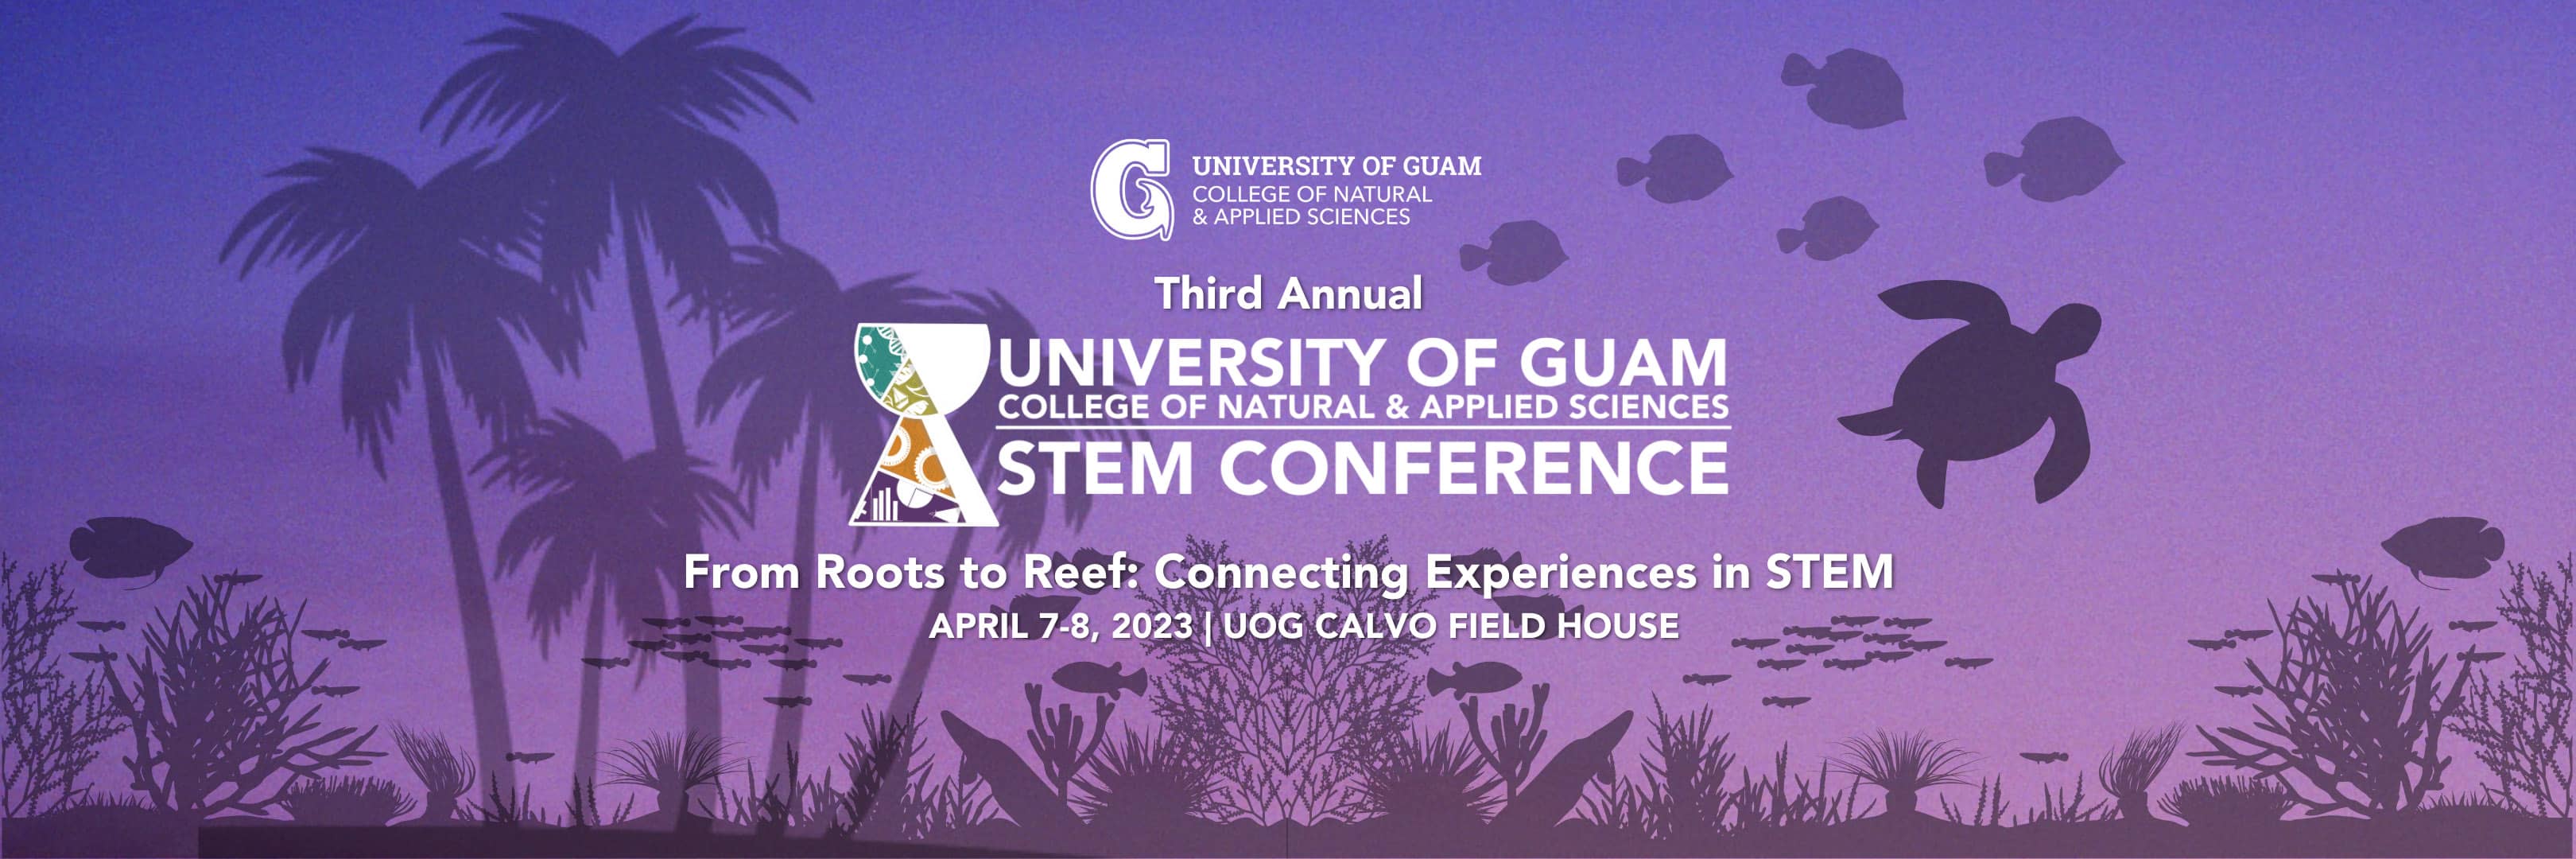 CNAS STEM Conference University of Guam